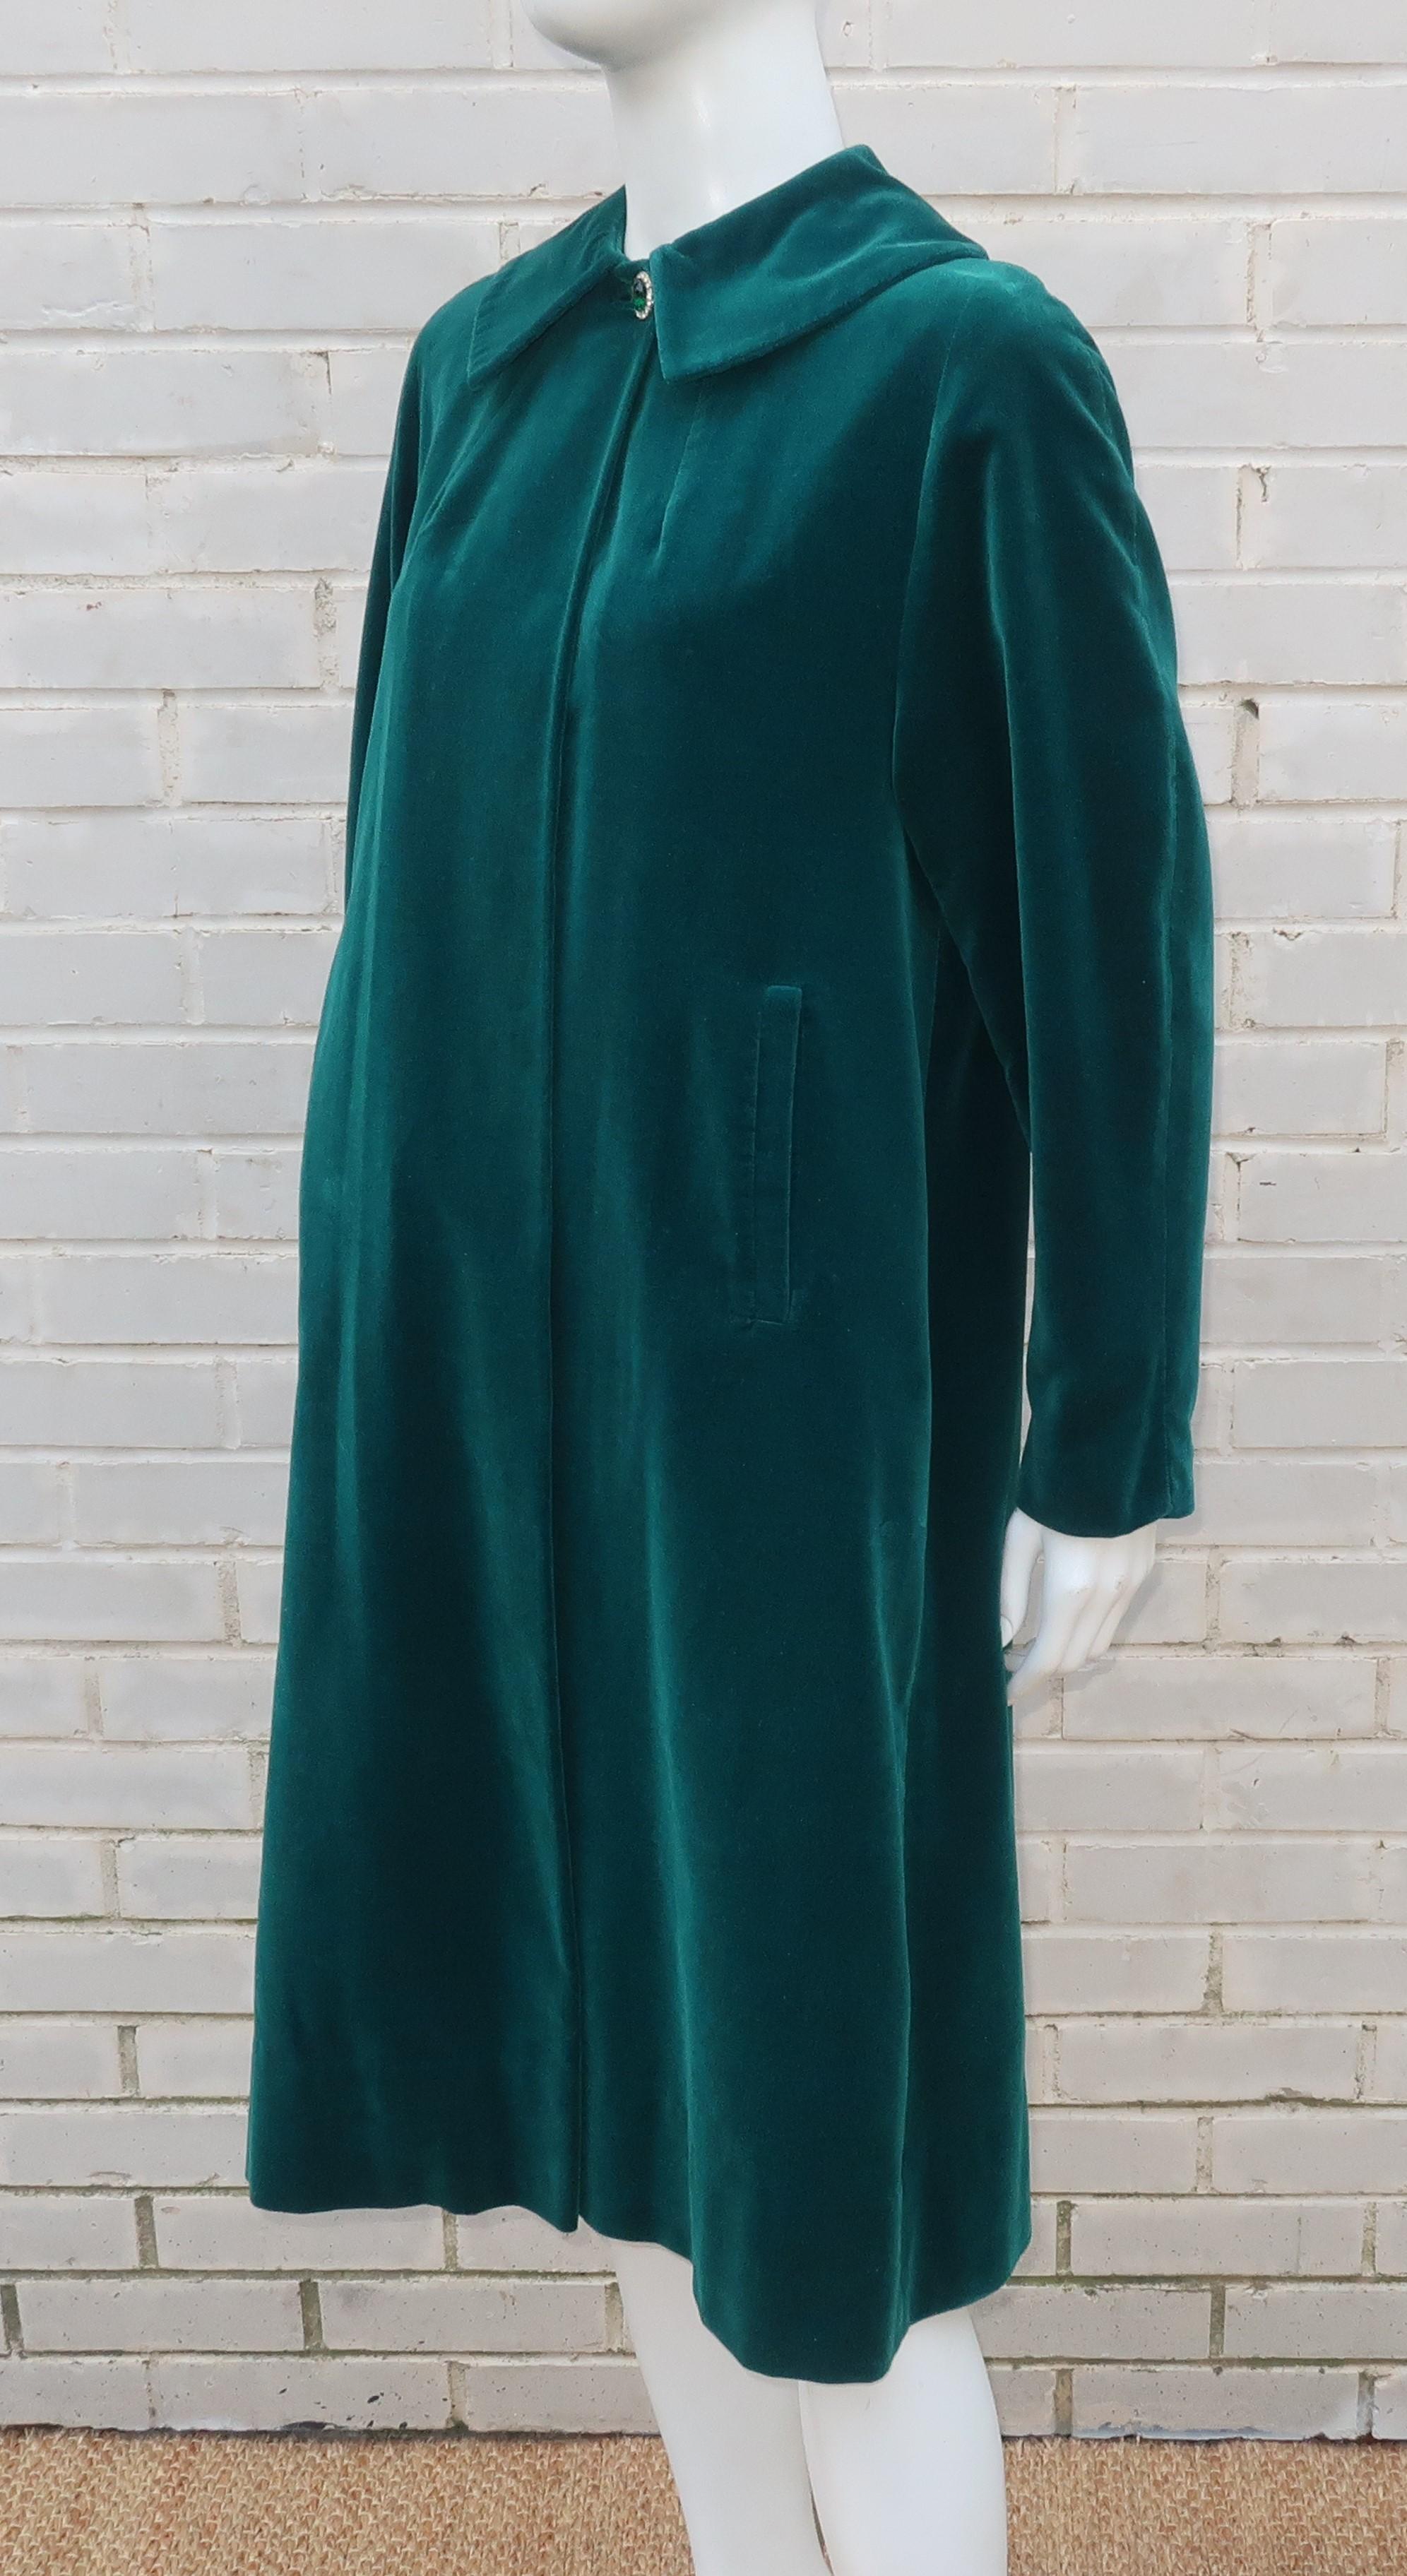 Women's Italian Emerald Green Velvet Coat with Bow Accent, 1950s 